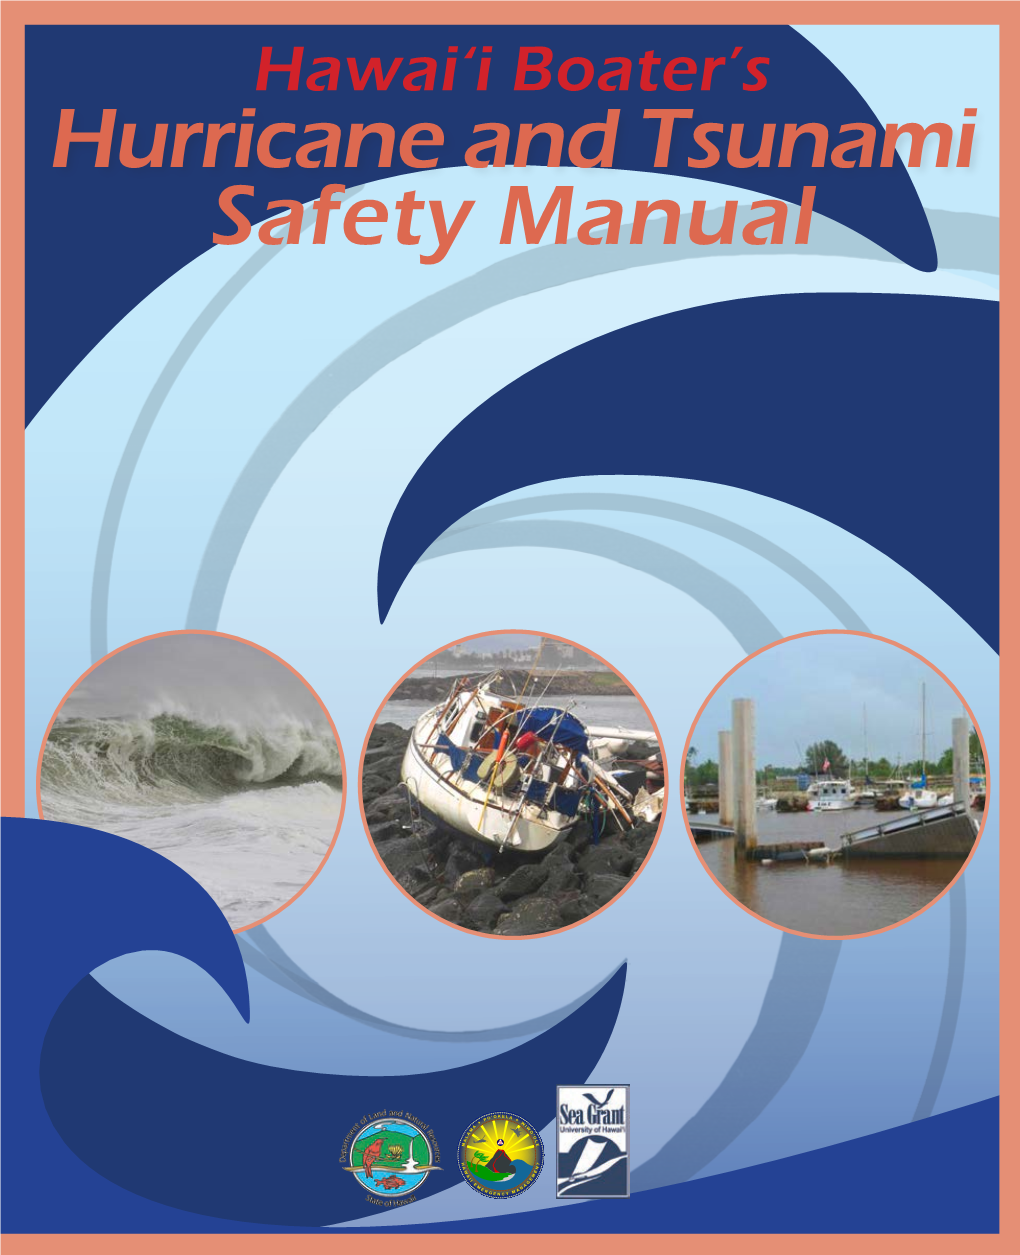 Hawai'i Boater's Hurricane and Tsunami Safety Manual